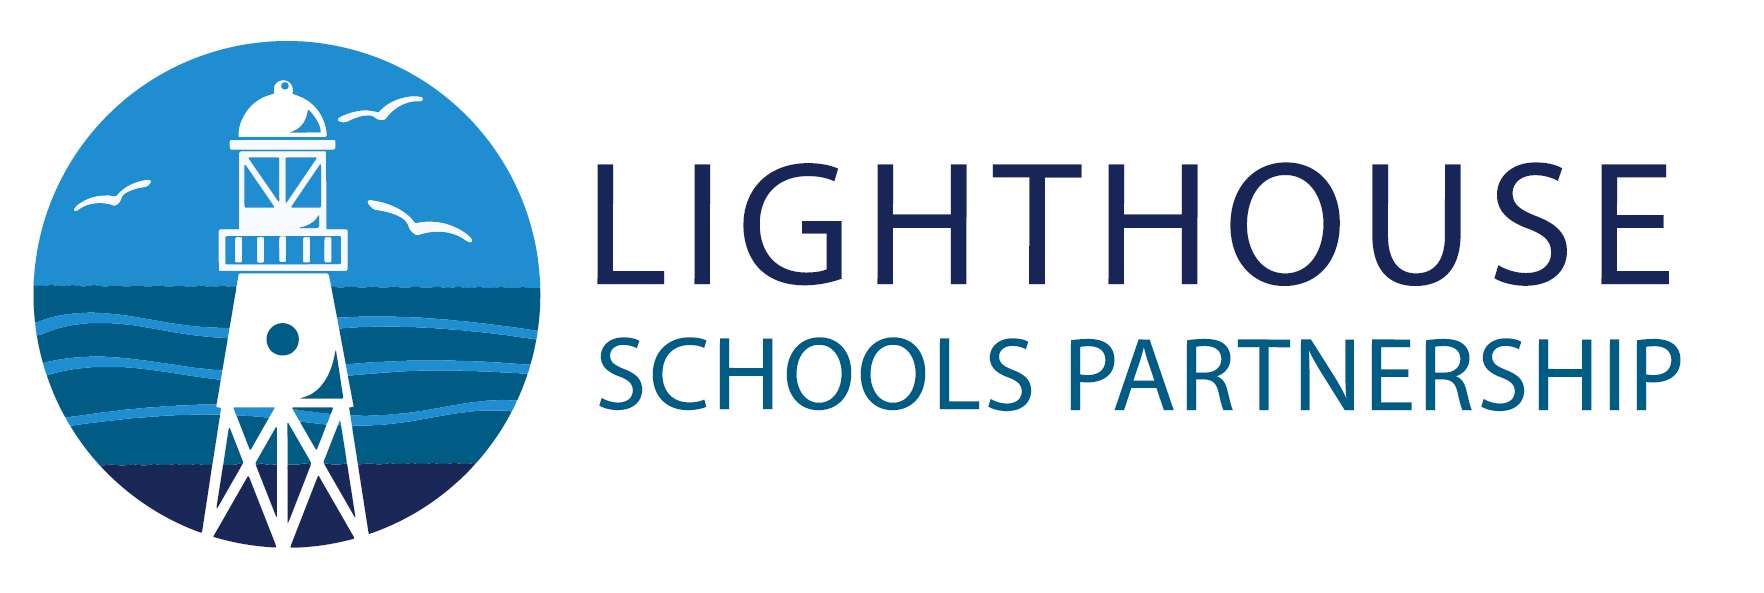 Lighthouse Schools Partnership